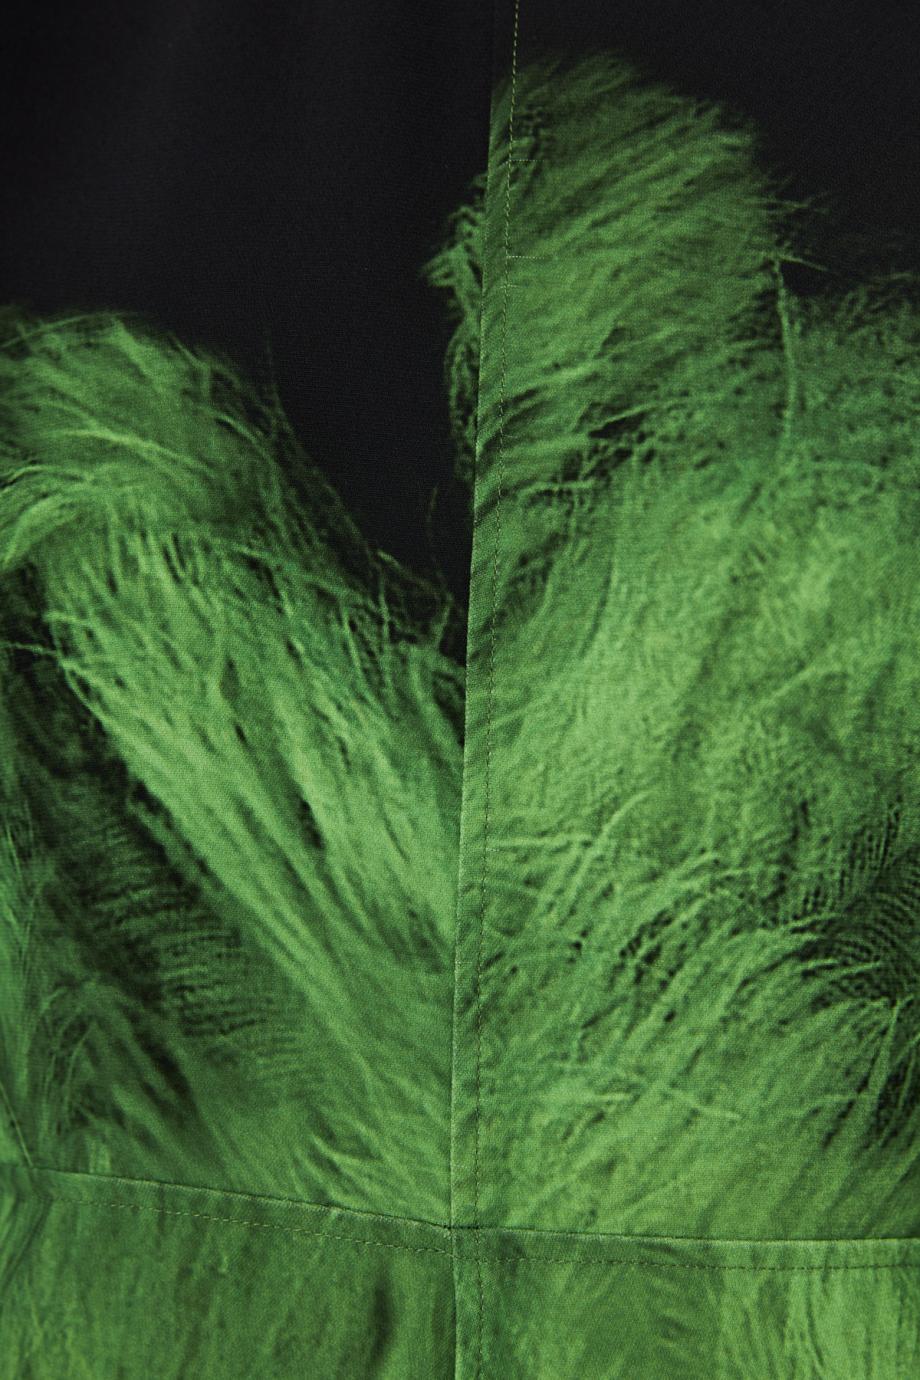 Dolman Midi Dress In Green Digital Feather Print